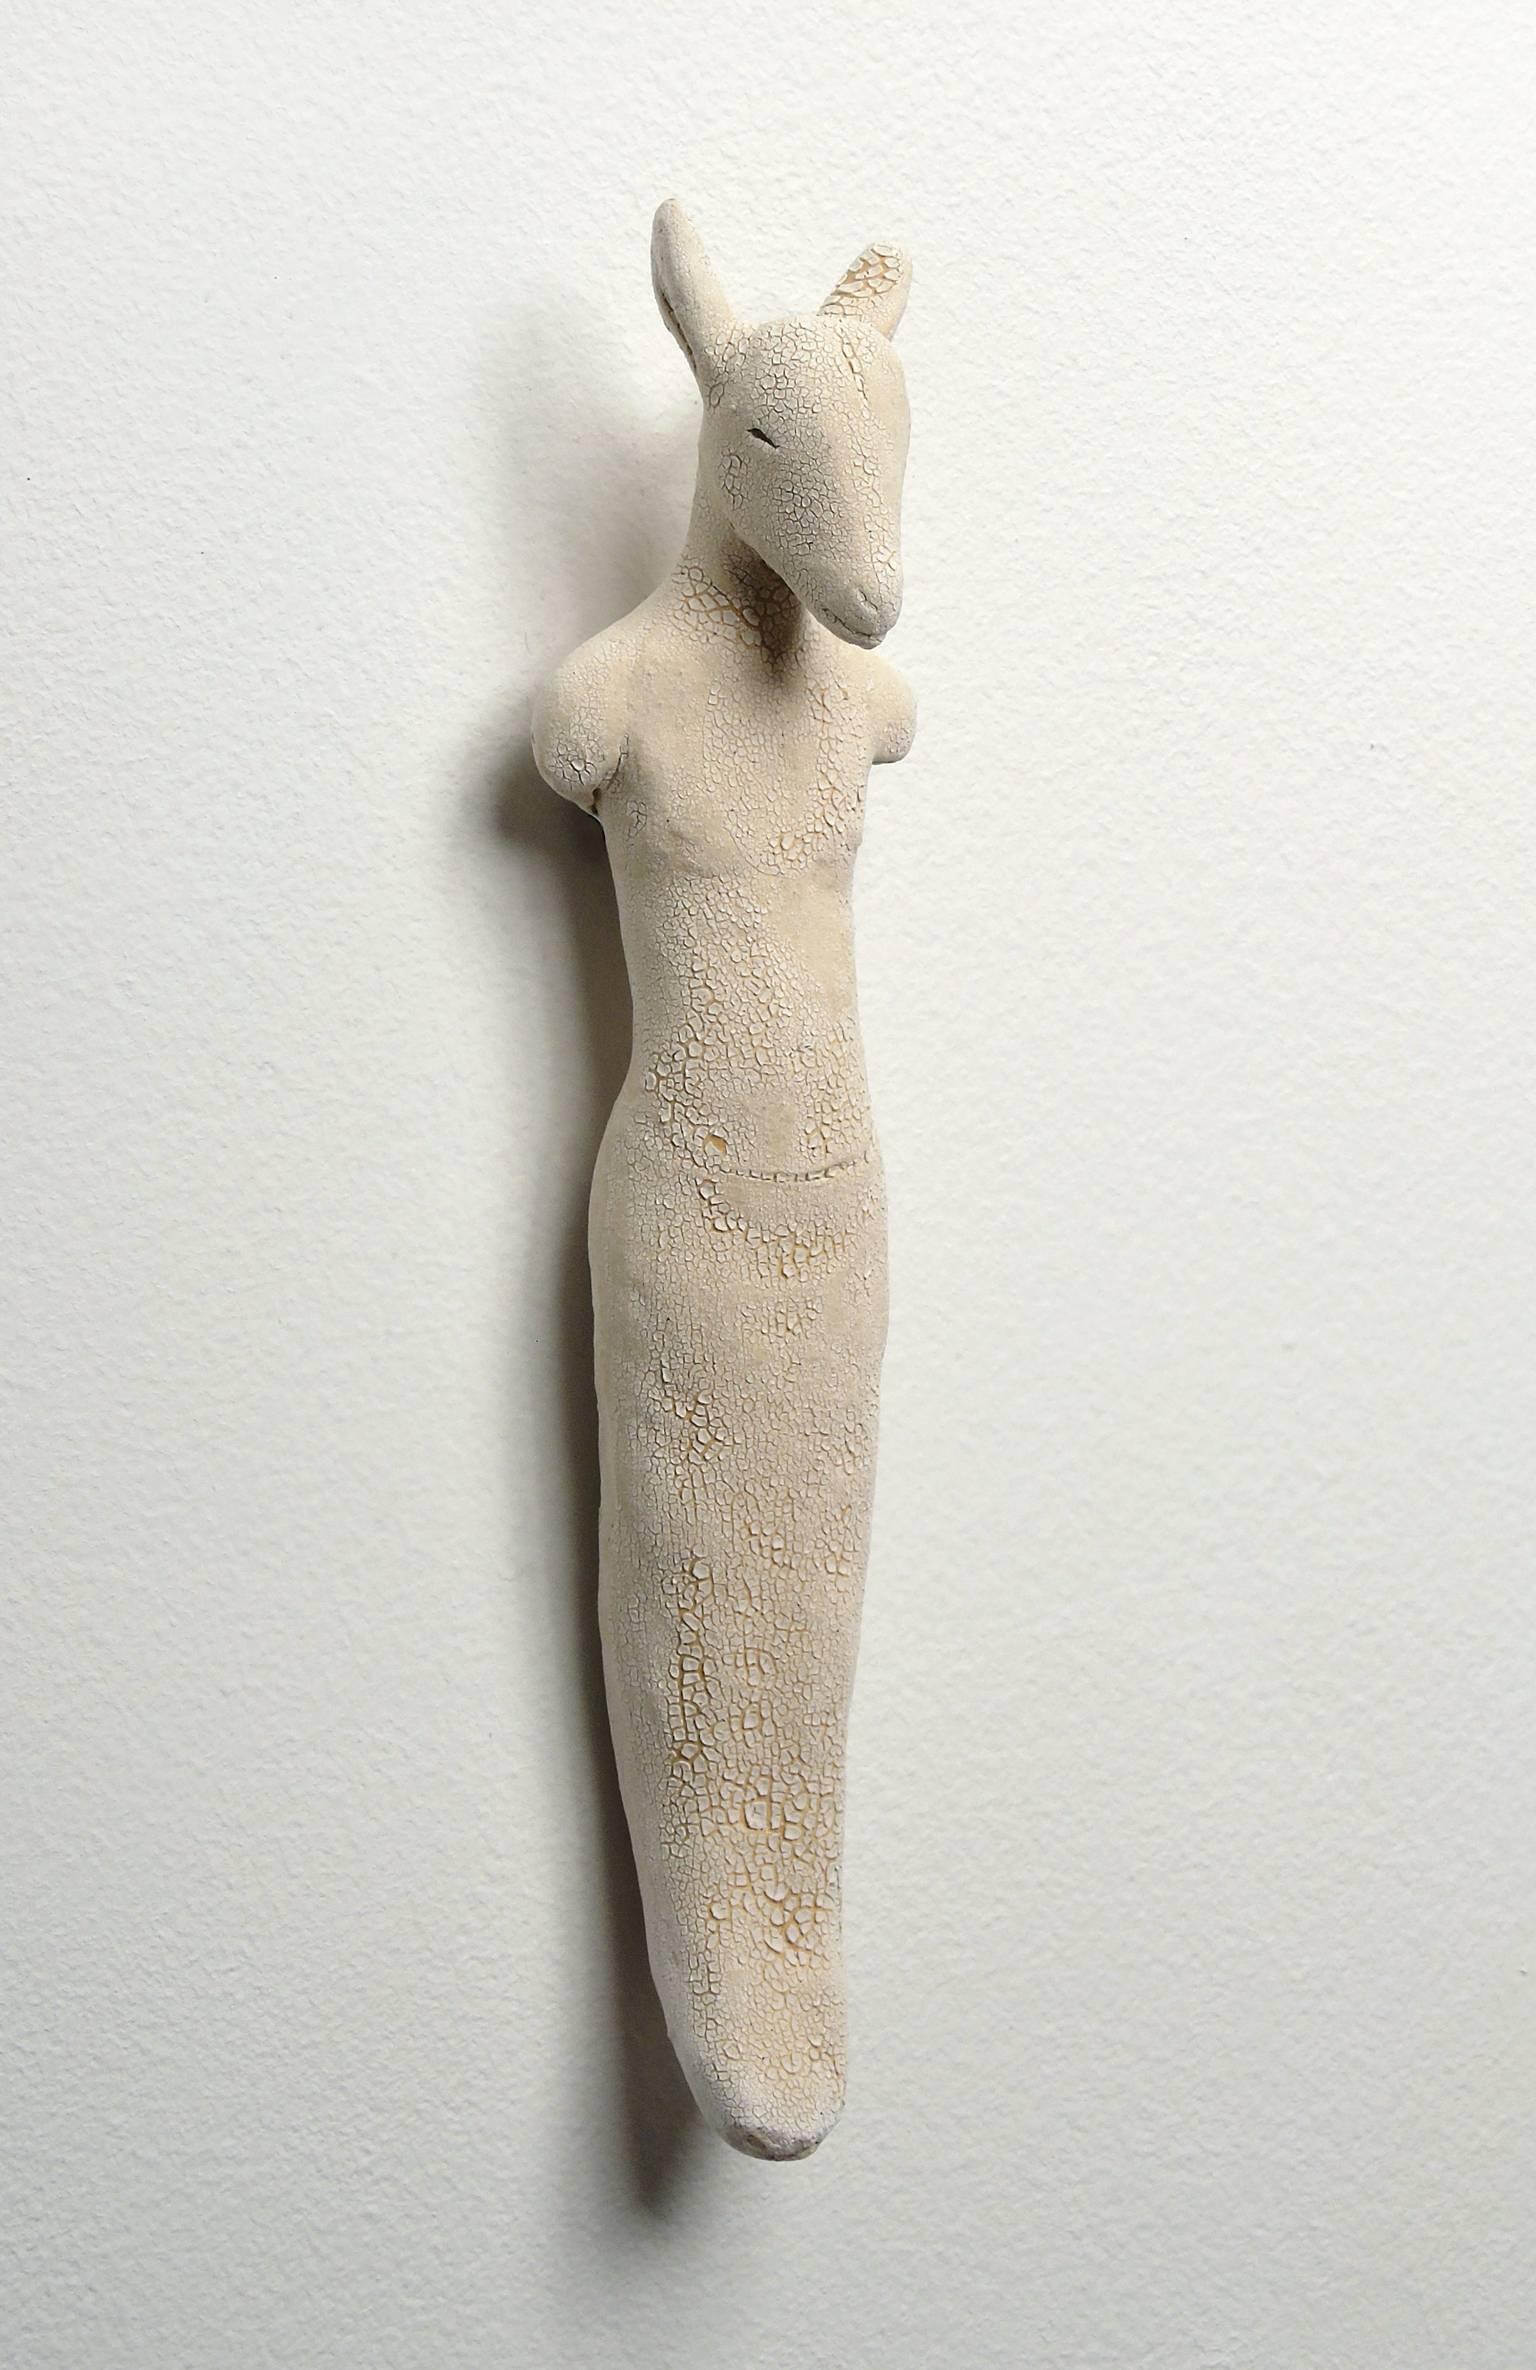 Robin Whiteman Figurative Sculpture - Untitled Goat Figure in porcelain